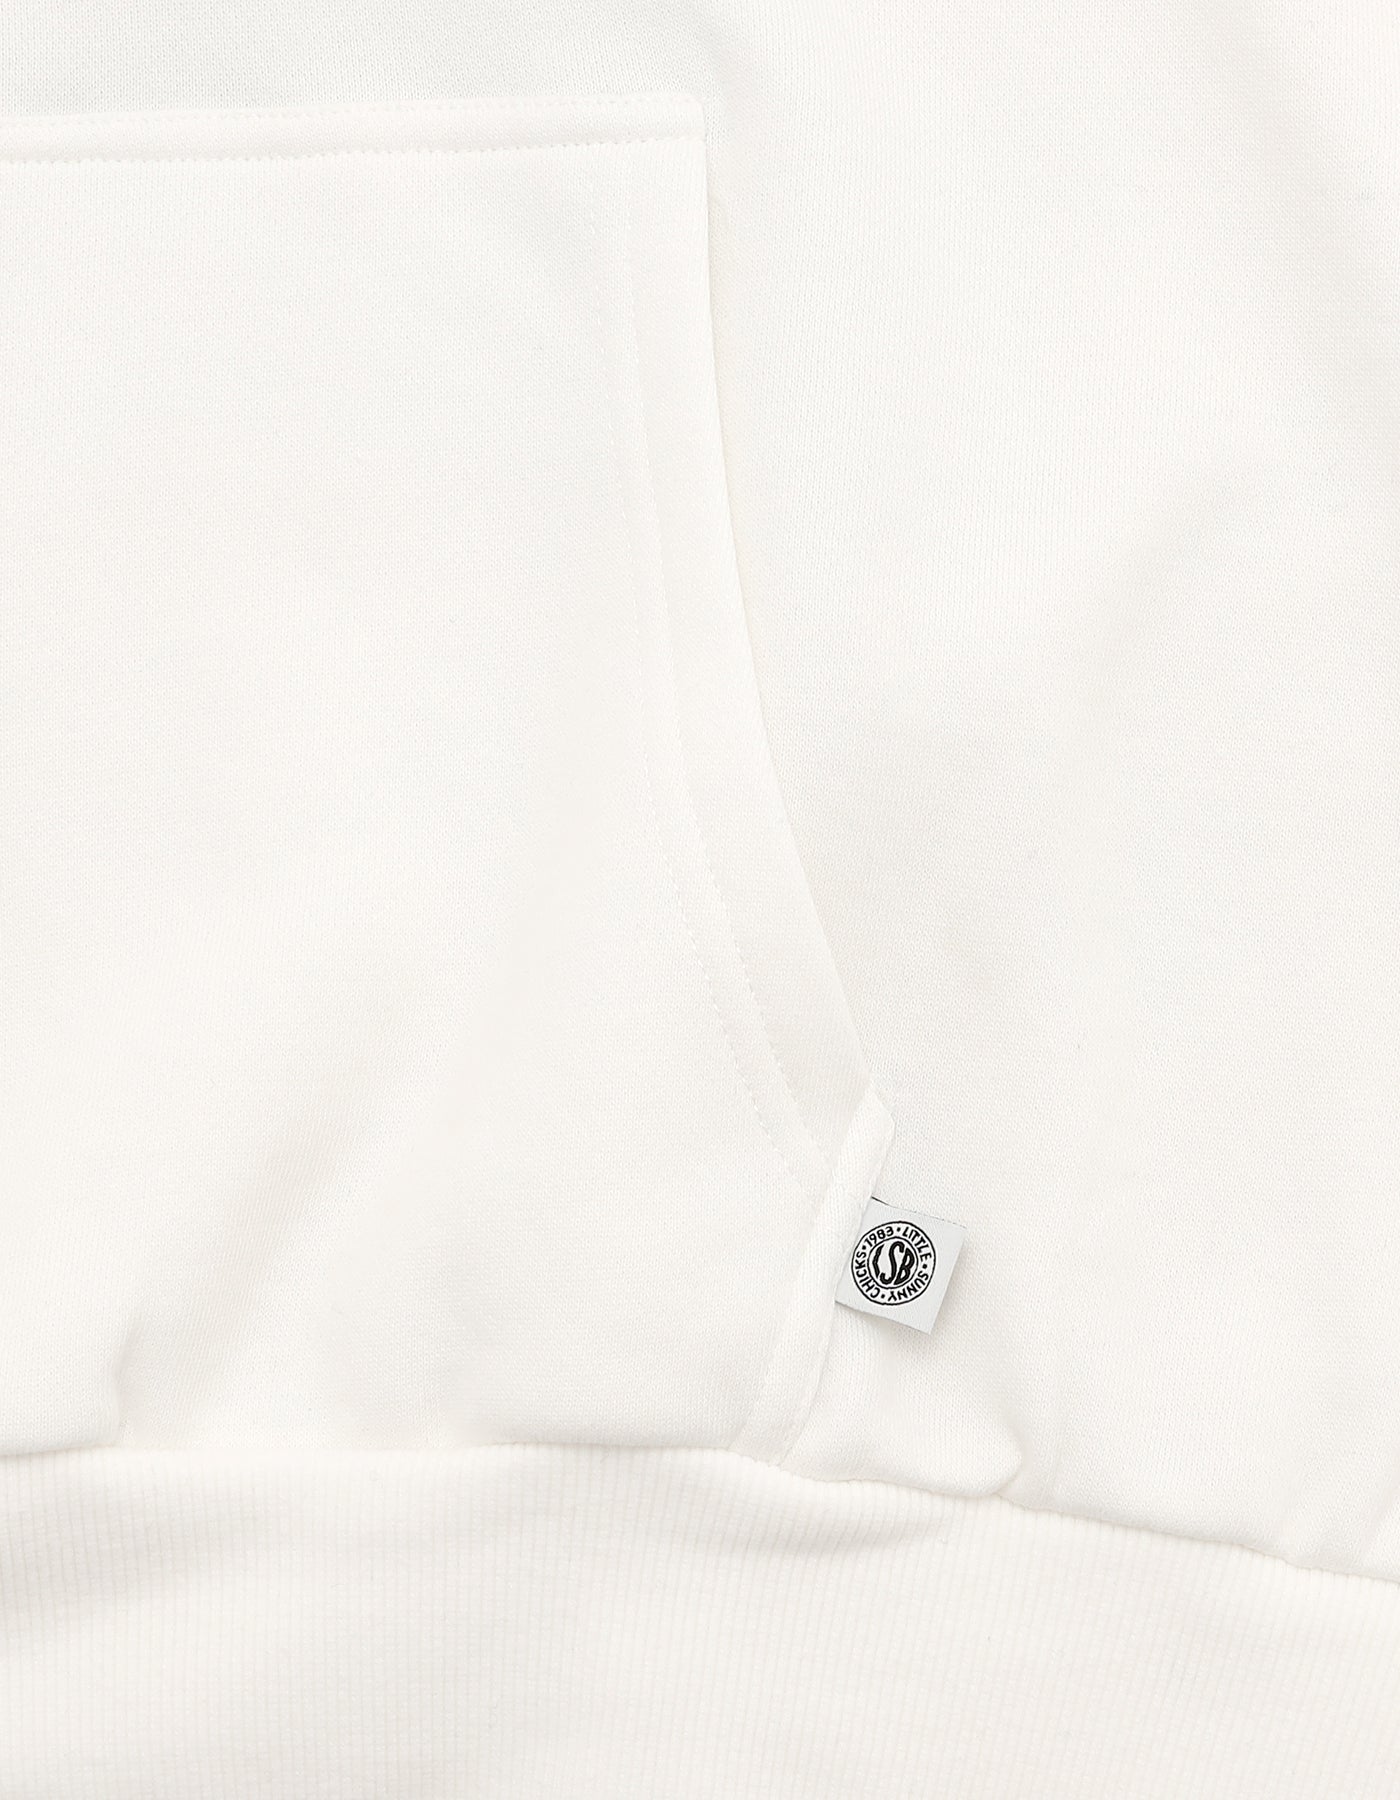 Vincent Gallo x little sunny bite photo hoodie / WHITE